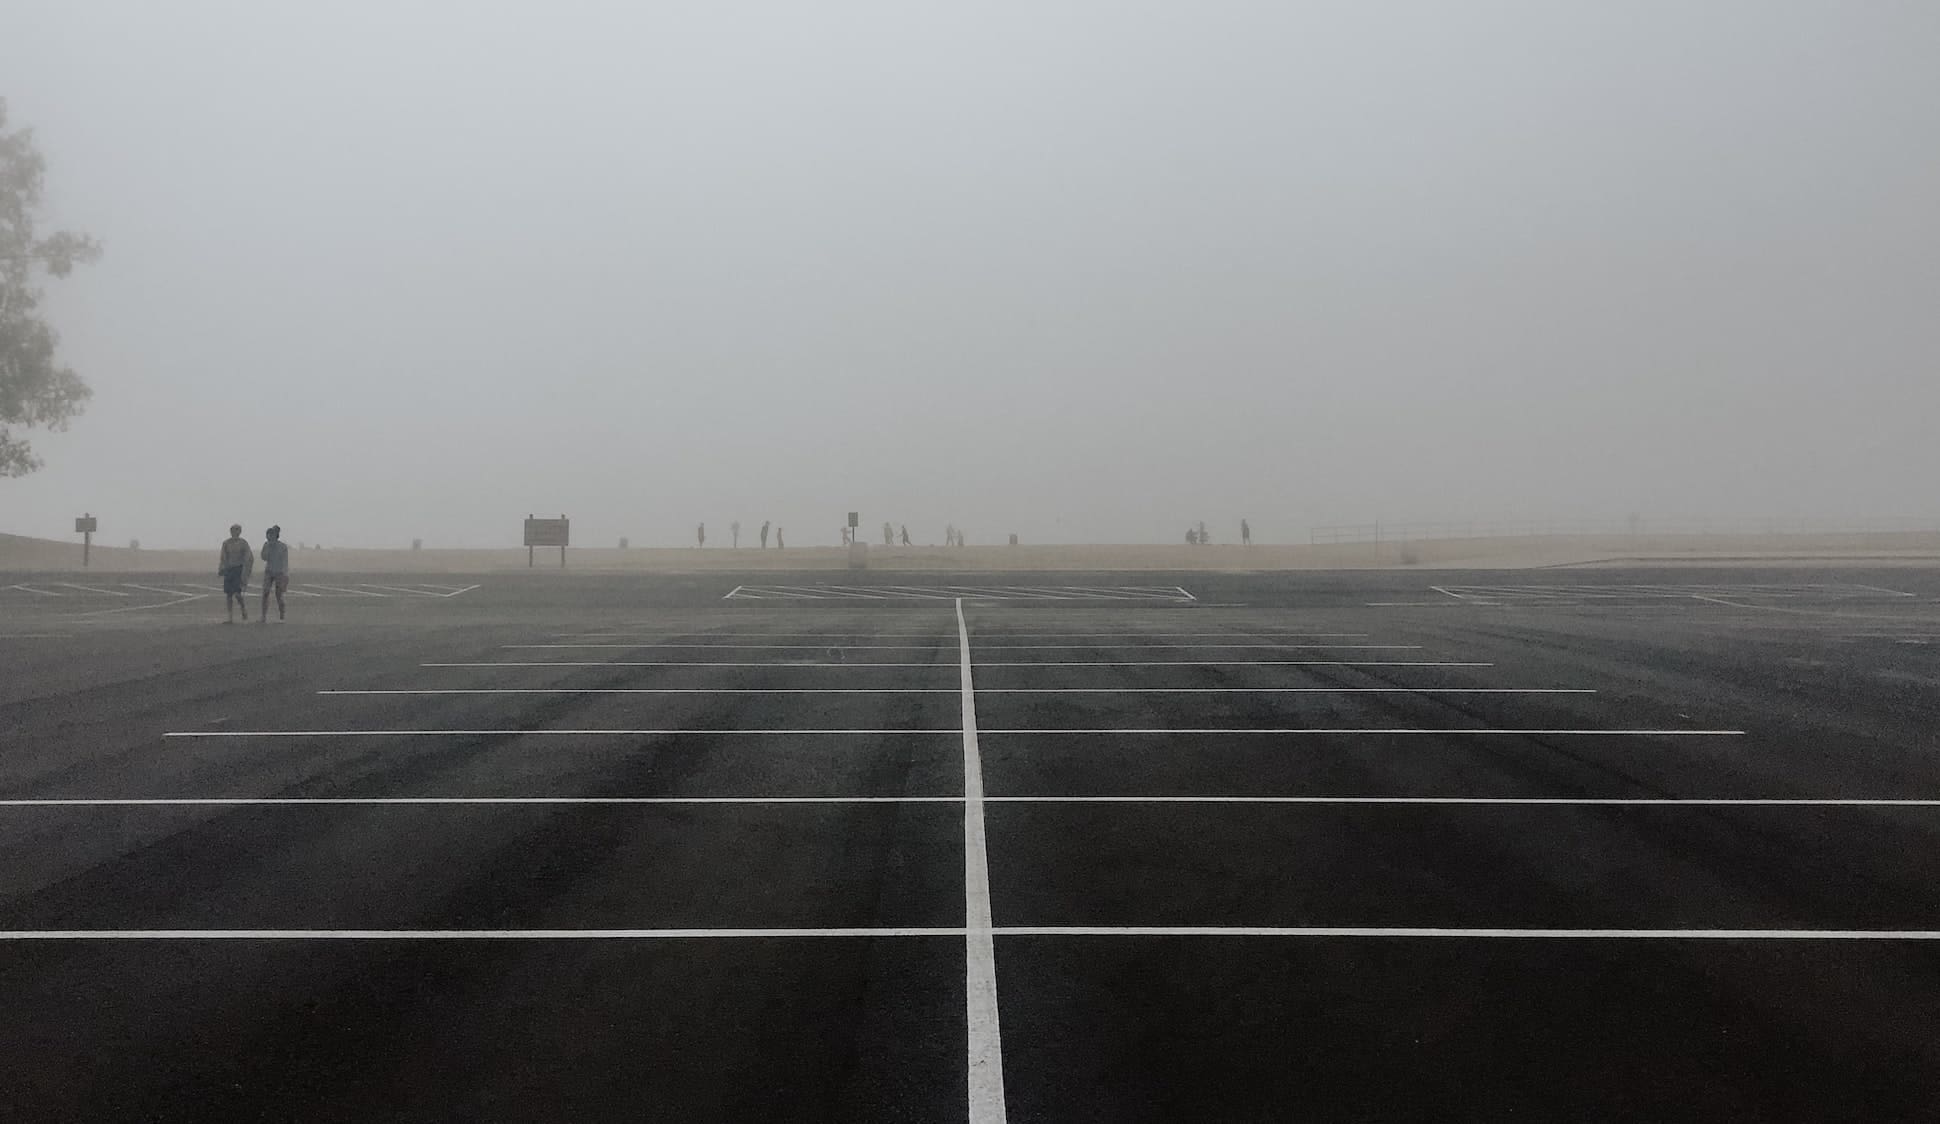 Photo of empty parking lot by Helen Cramer for Unsplash